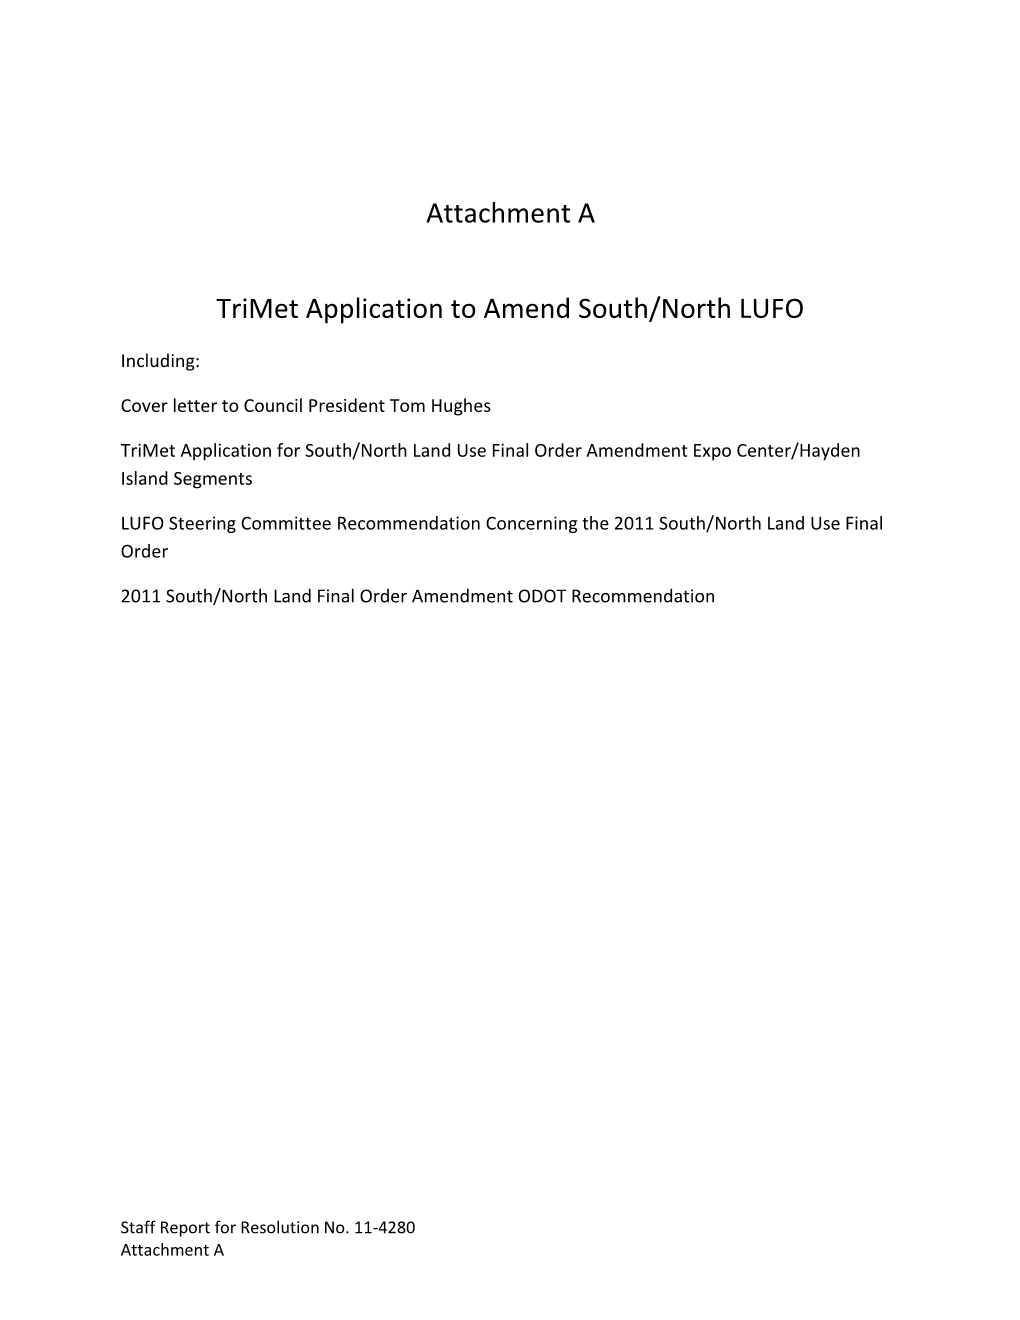 Attachment a Trimet Application to Amend South/North LUFO